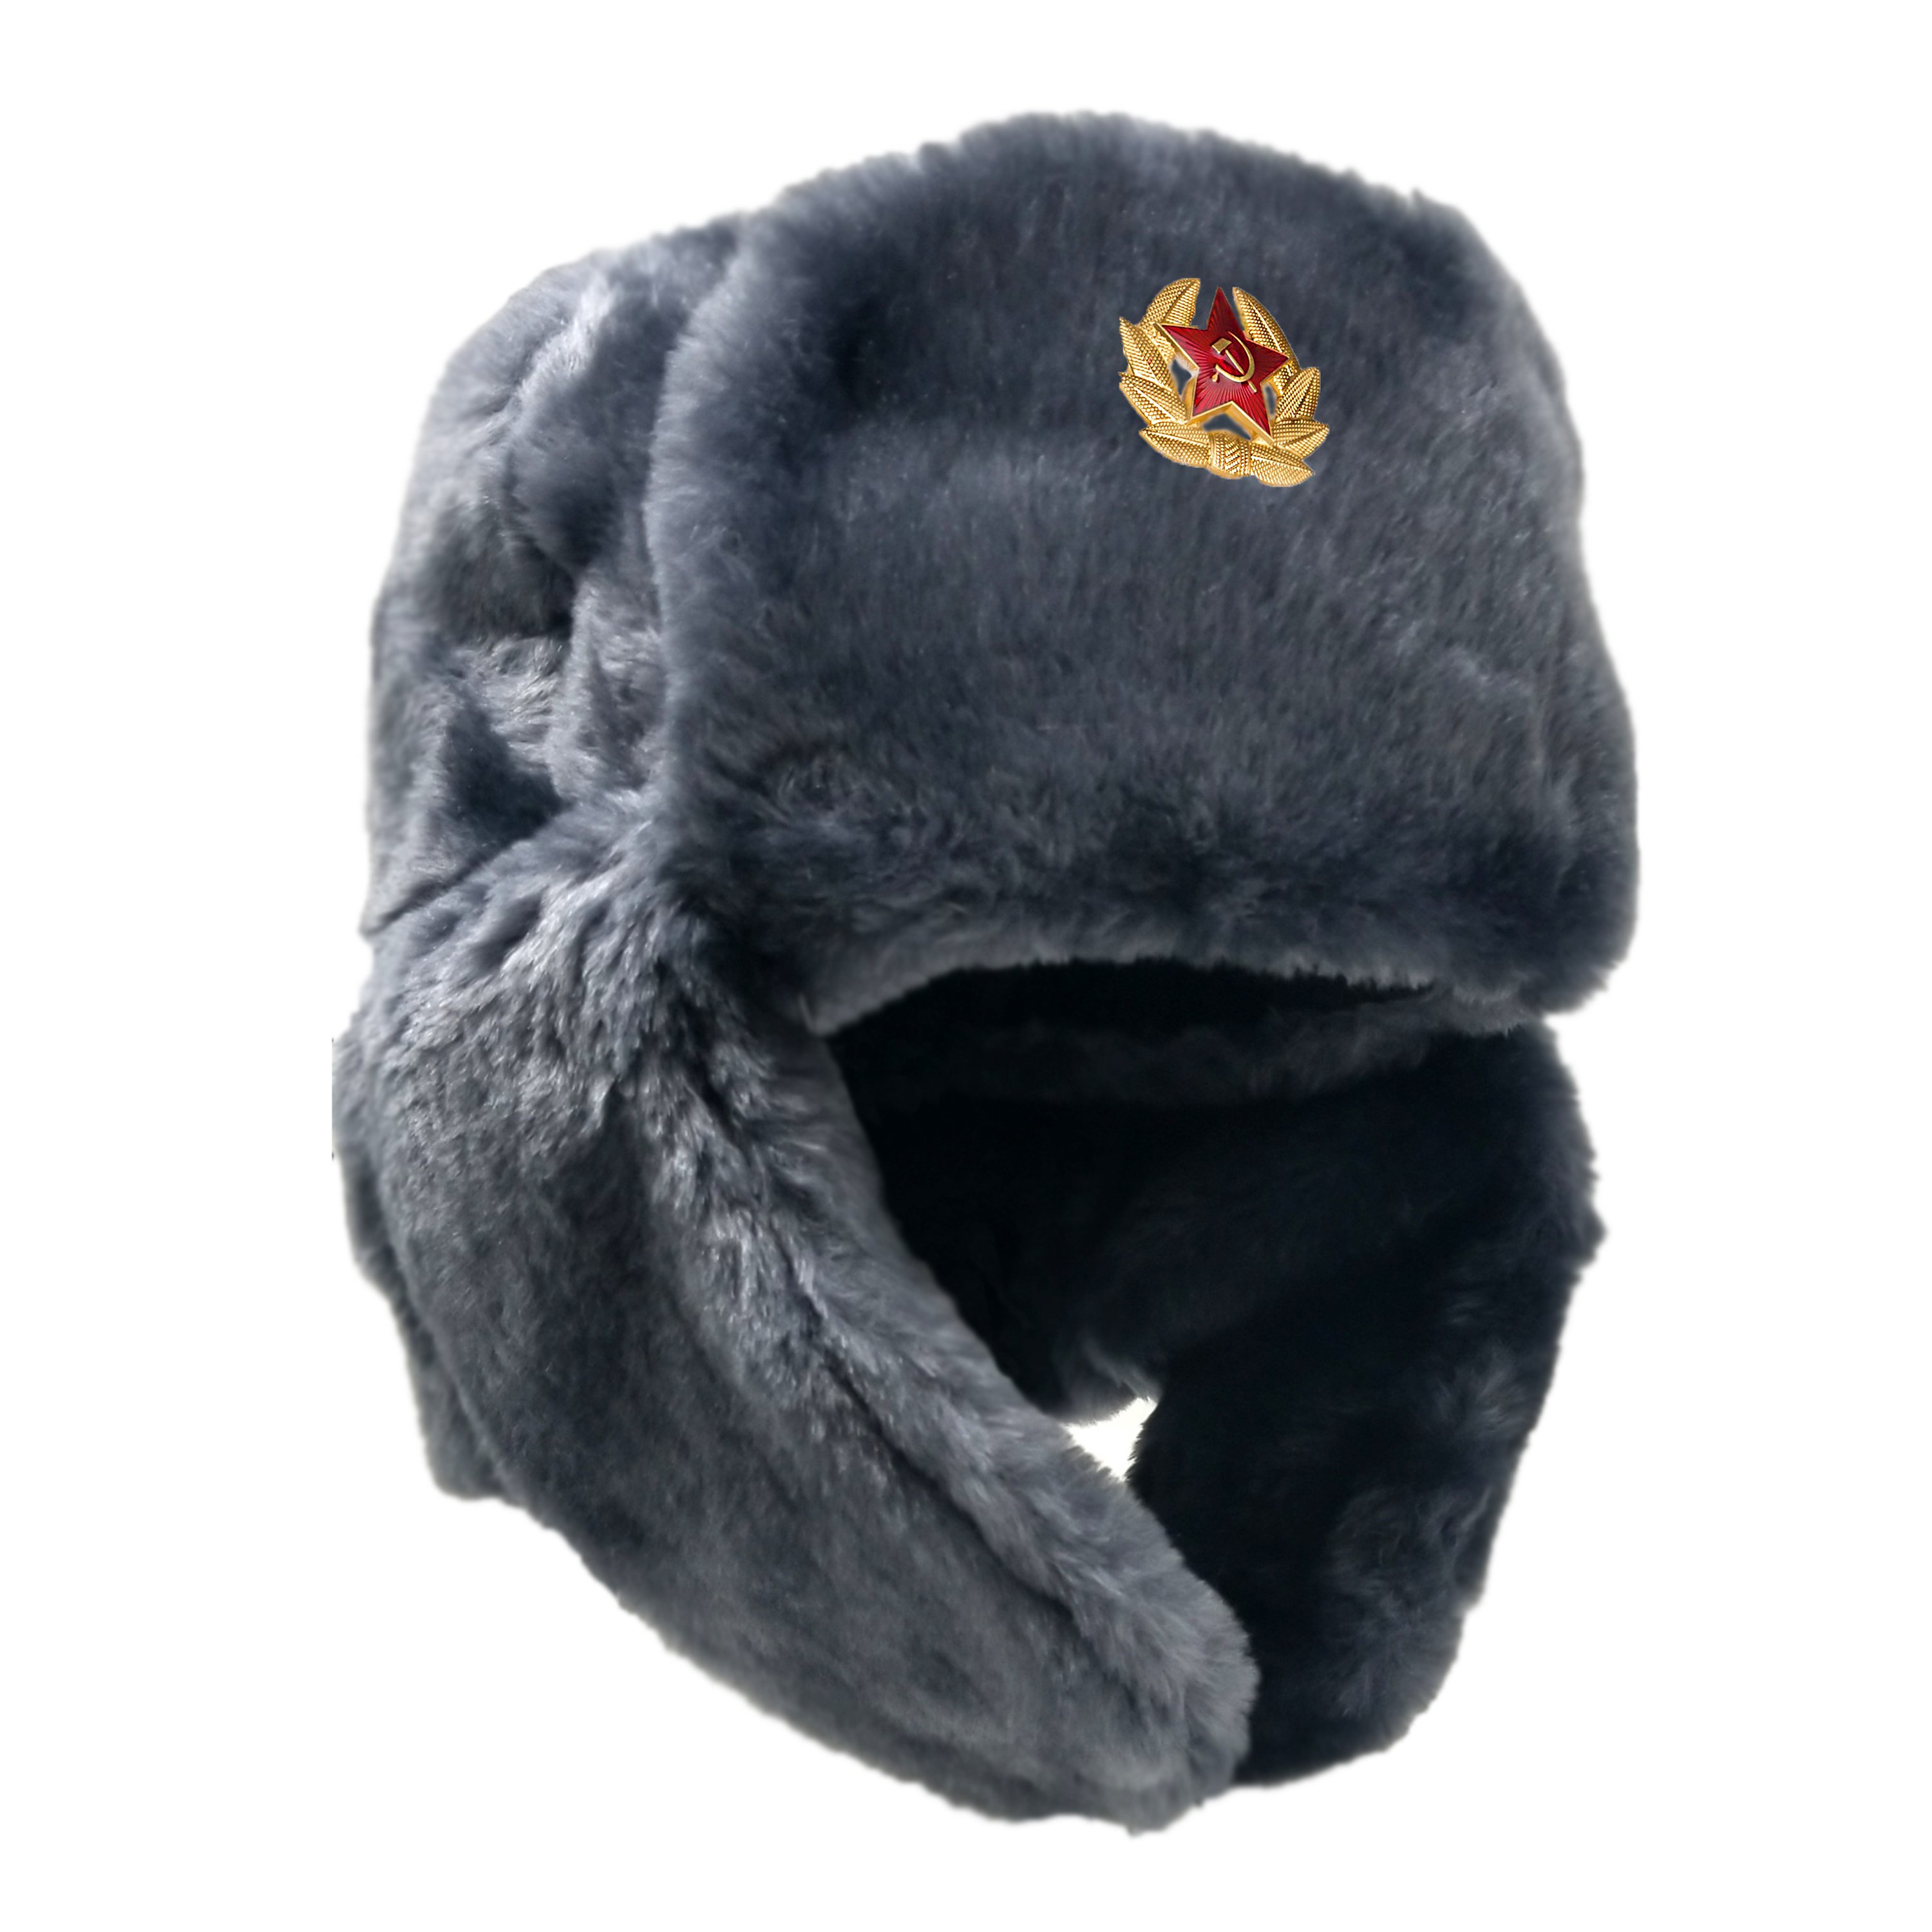 Ushanka, size 64/XXL. Russian Military Hat with Soviet Army Soldier Insignia, Gray